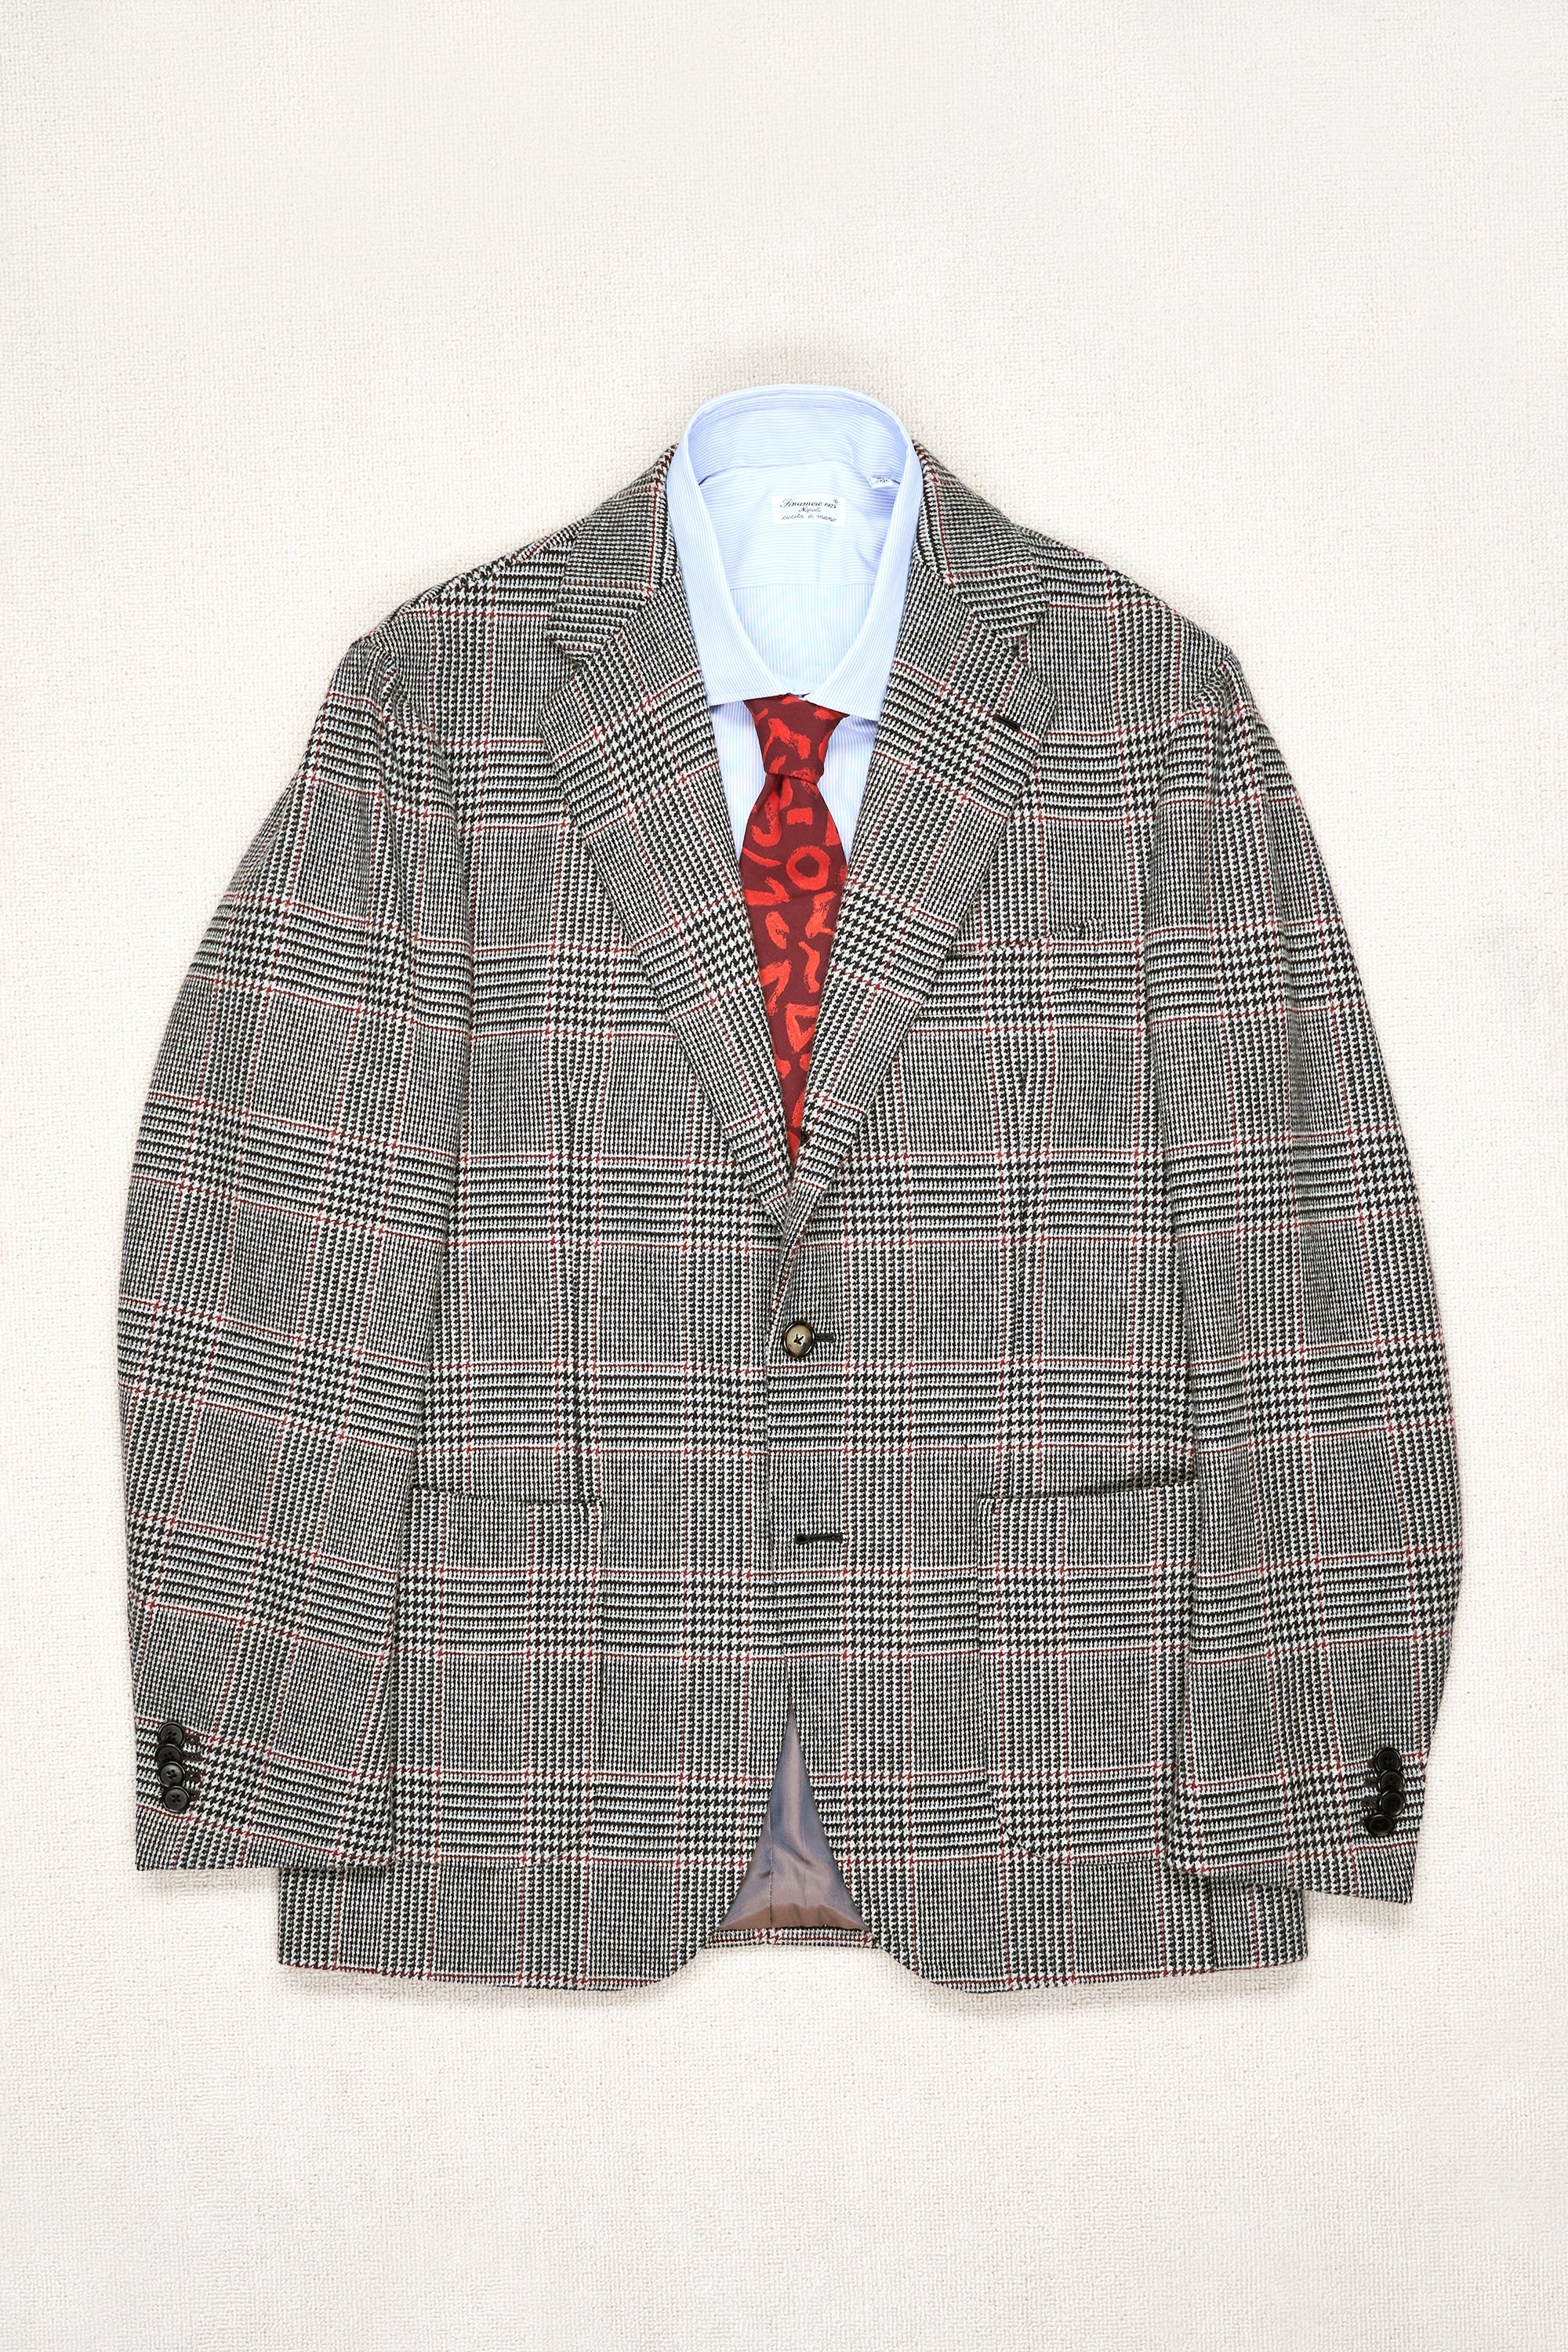 Casa Del Sarto Black/White/Red Prince of Wales Check Wool Sport Coat